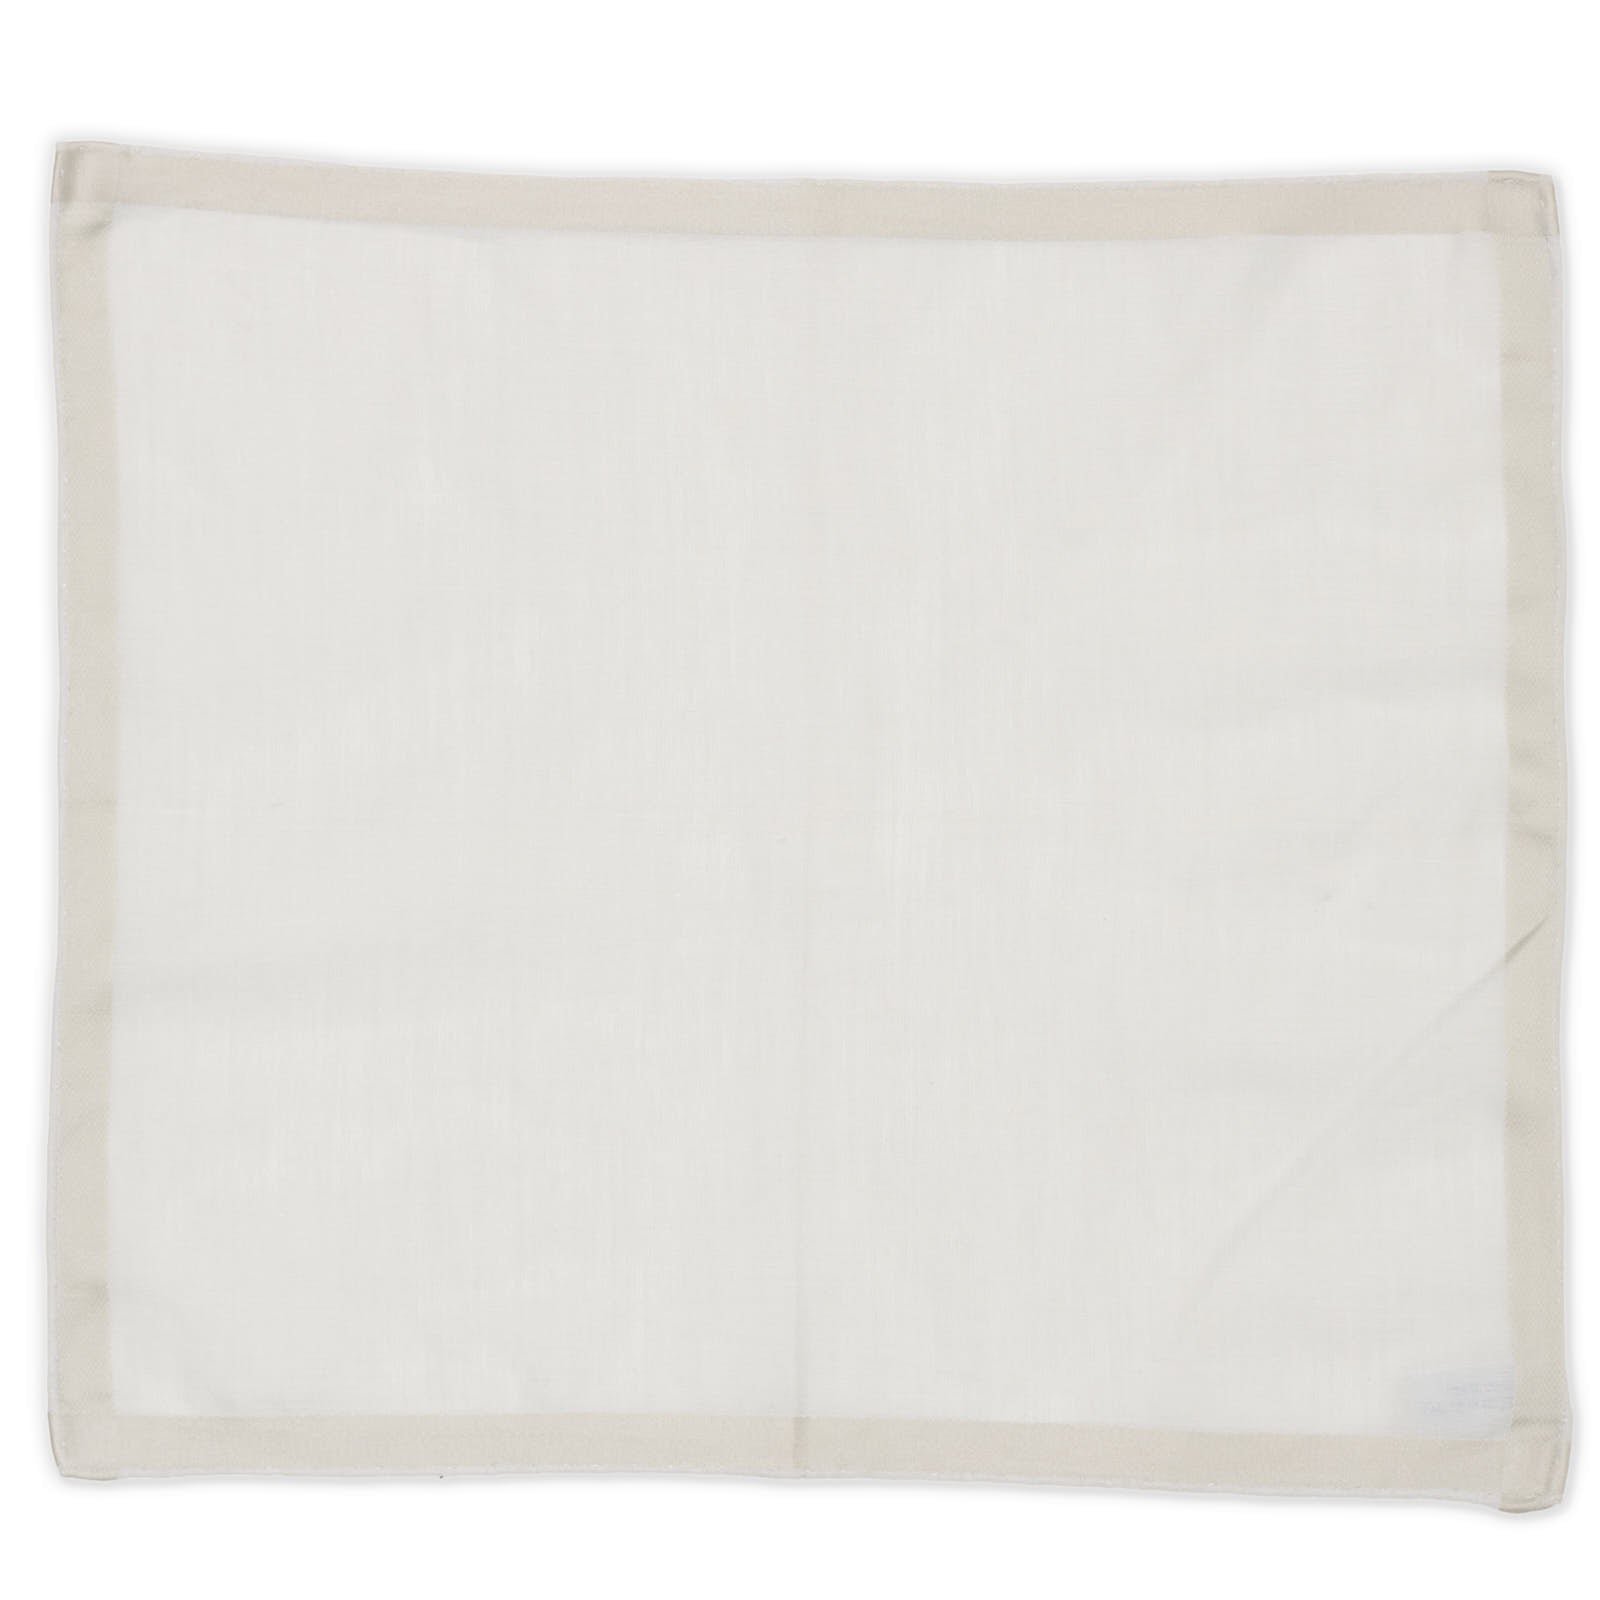 SIMONNOT GODARD Handmade Gray Solid Cotton Pocket Square NEW 30cm x 27cm